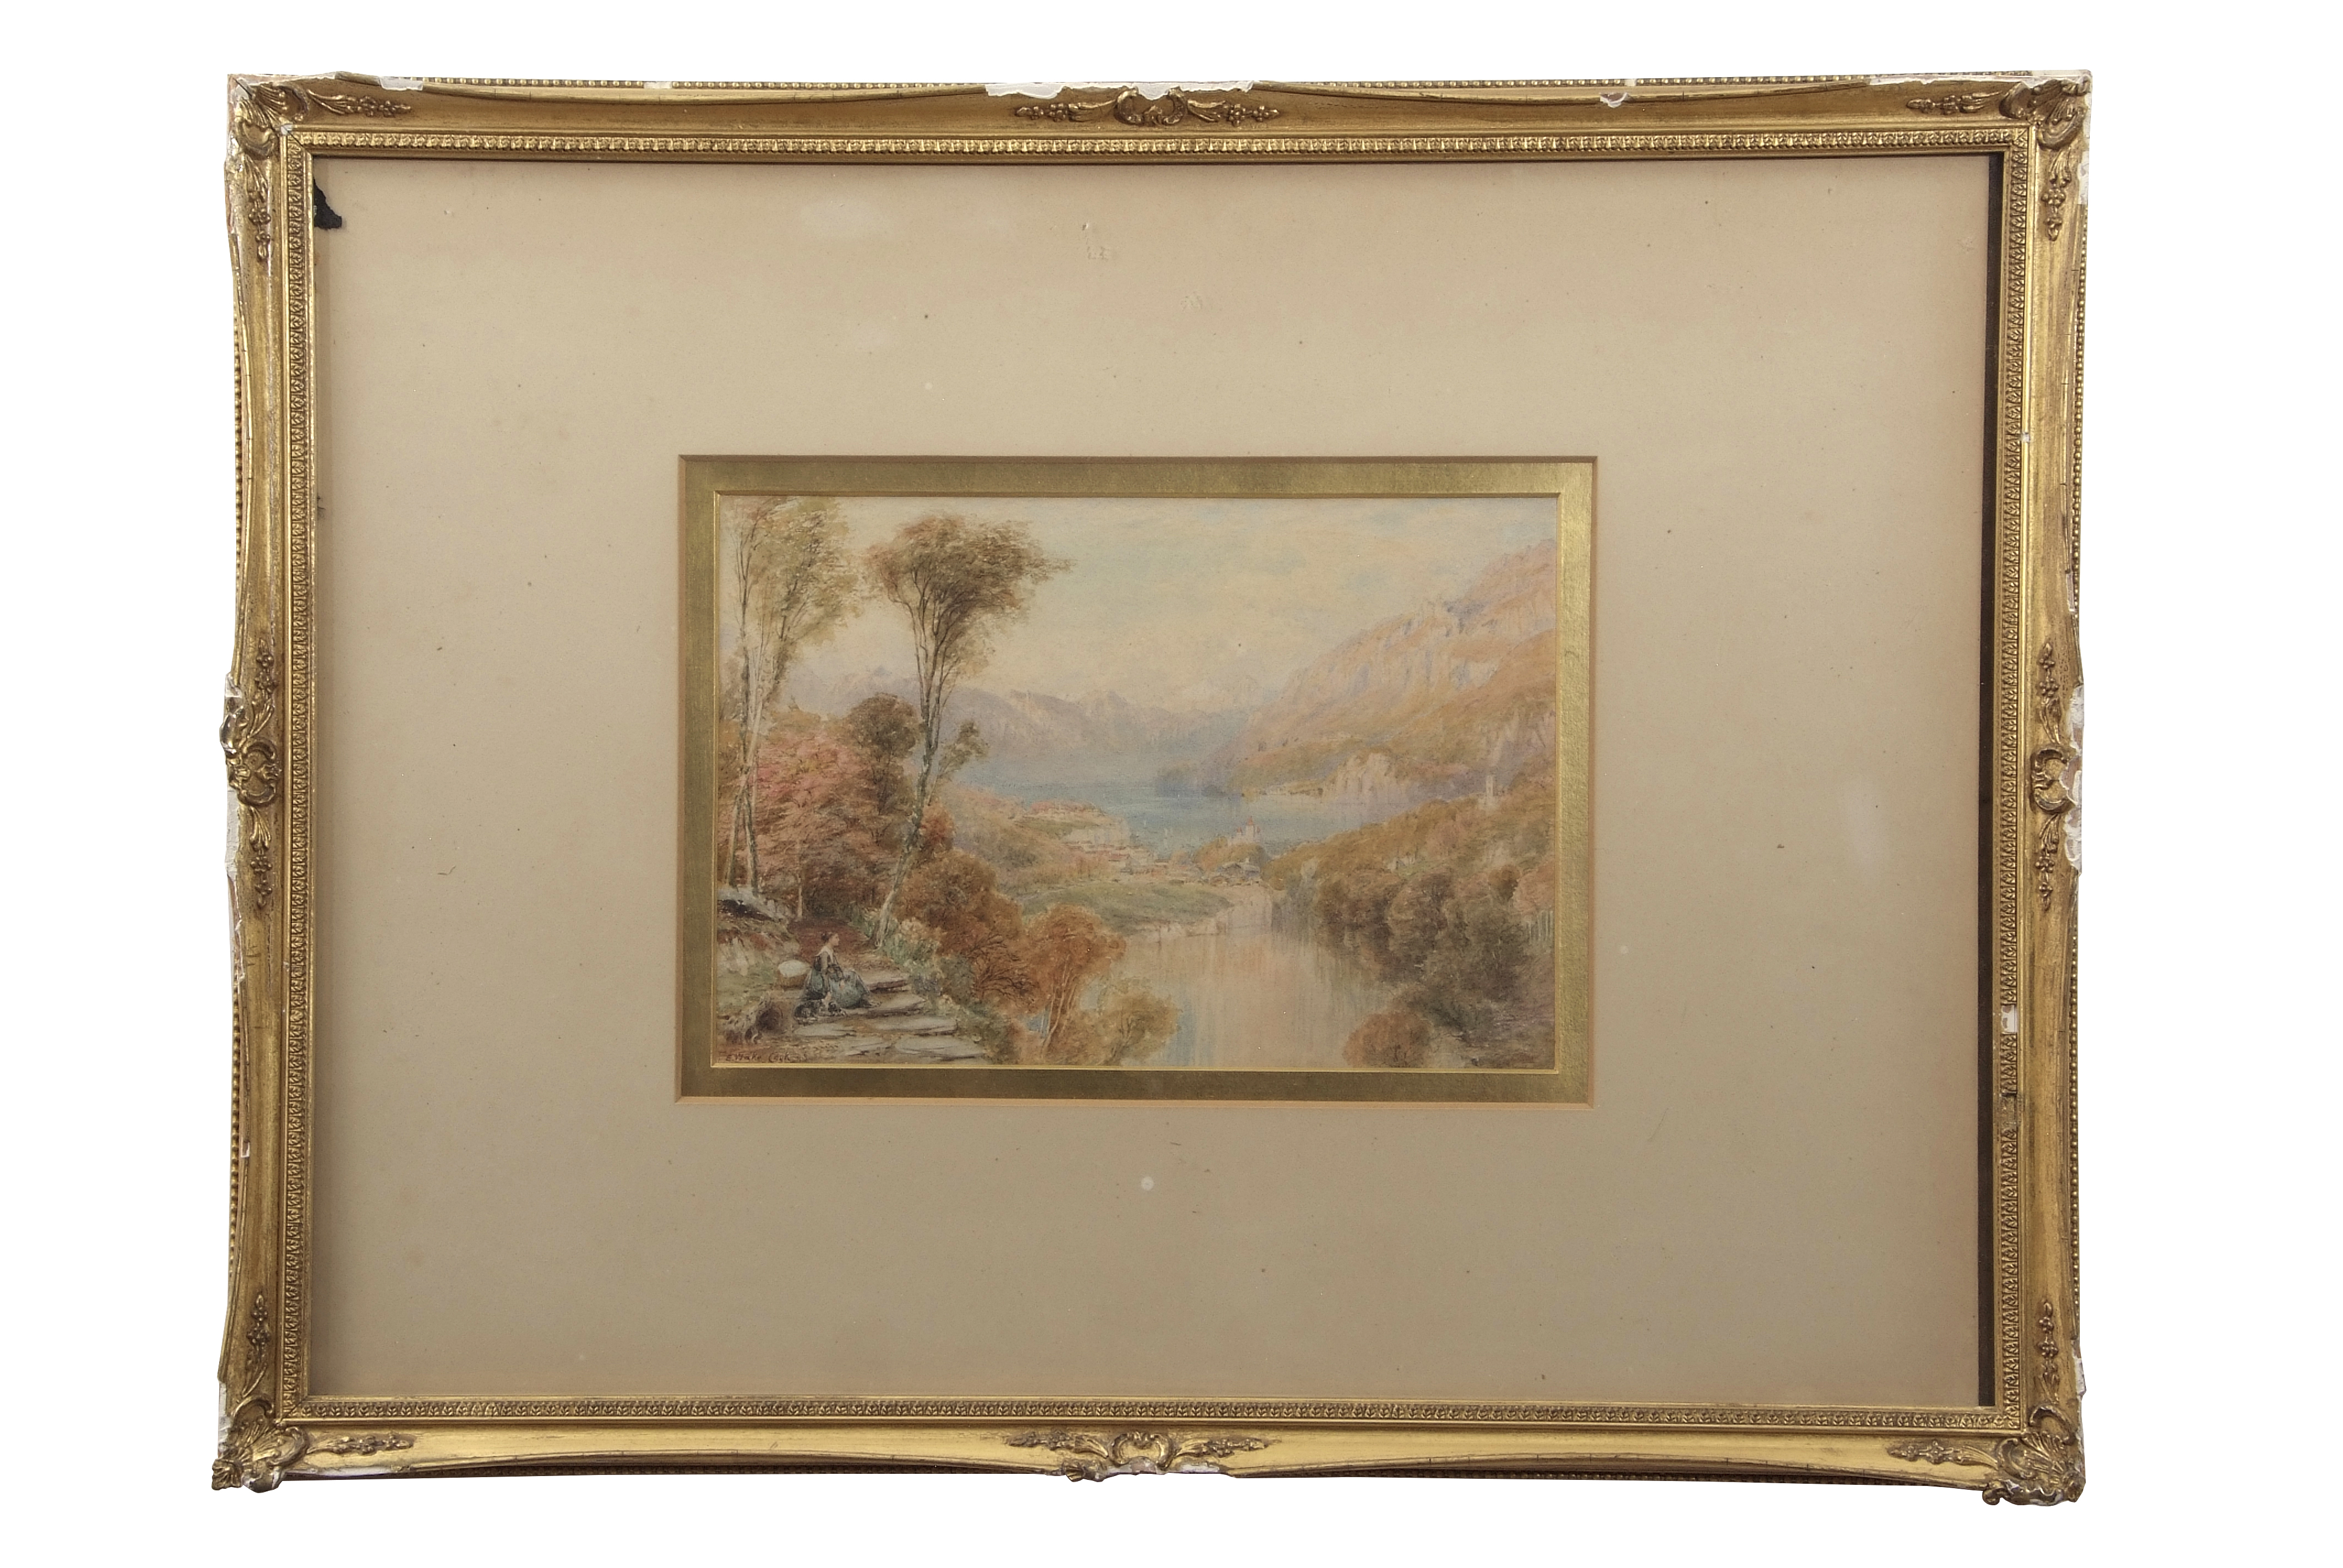 Ebenezer Wake Cook (1843-1926), "The Lake of Brieny near Interlaken", watercolour, signed and